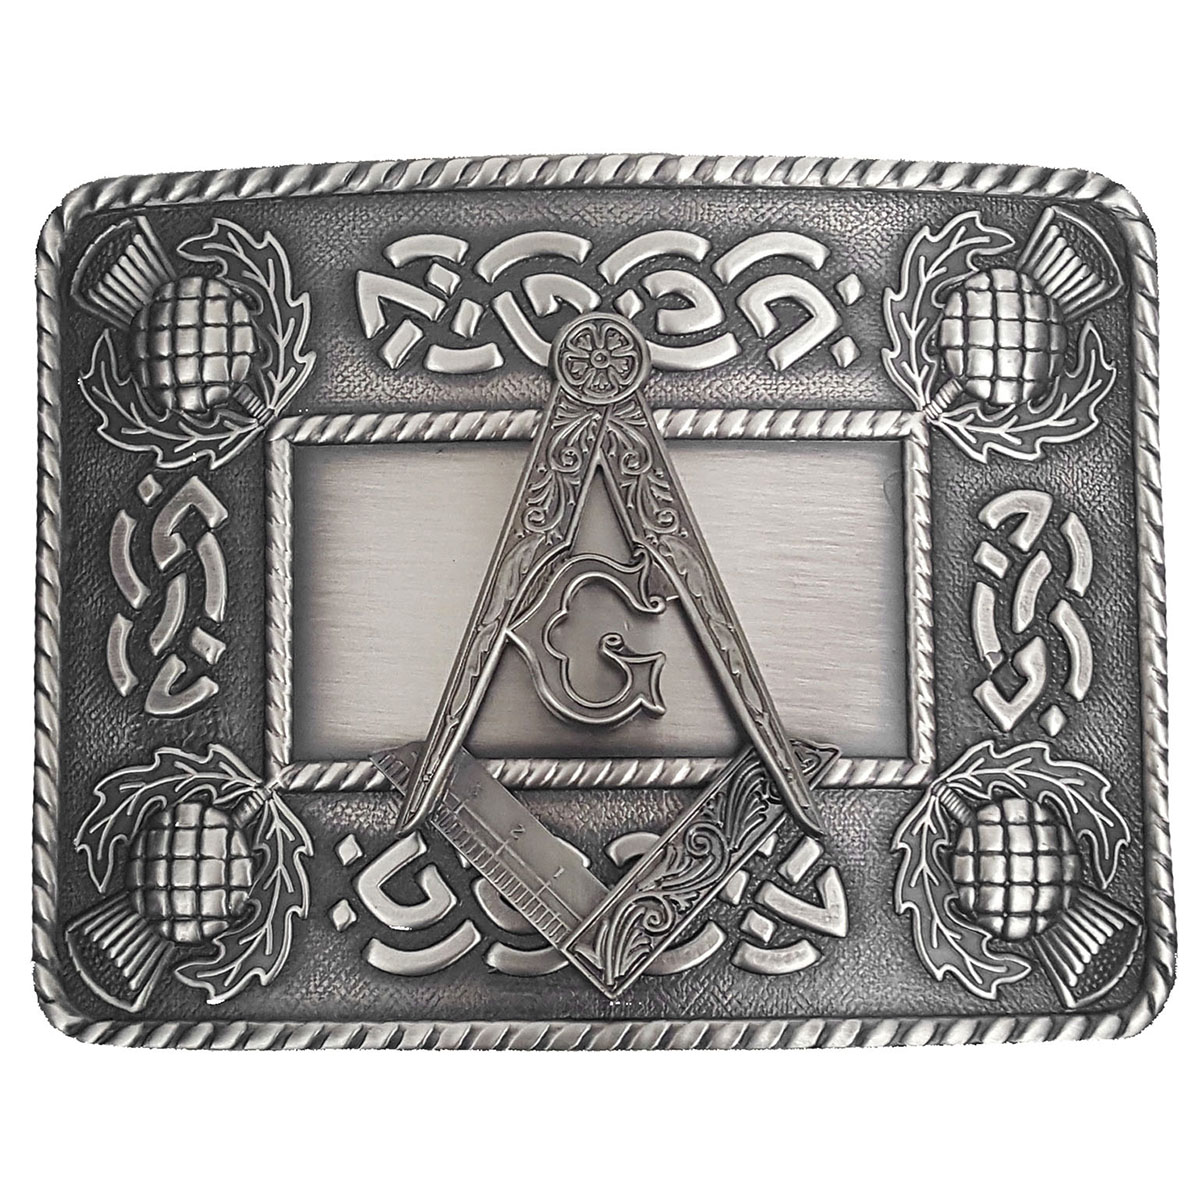 Scottish Kilt Belt Buckle Matt Oval Design with Thistle Badge Antique Finish